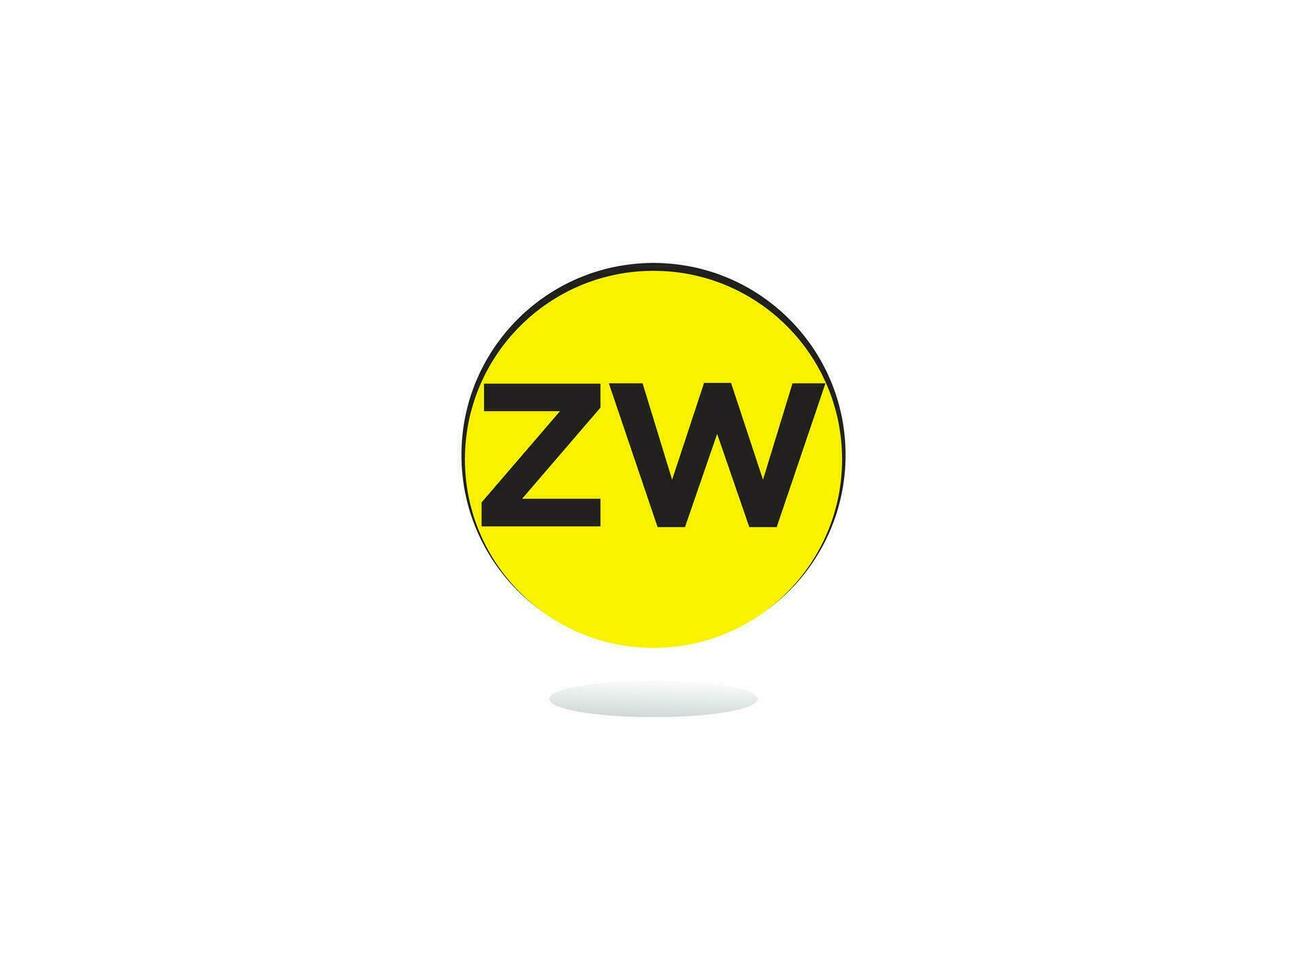 monogramma Z W logo icona, iniziale Z W wz lusso cerchio logo lettera design vettore